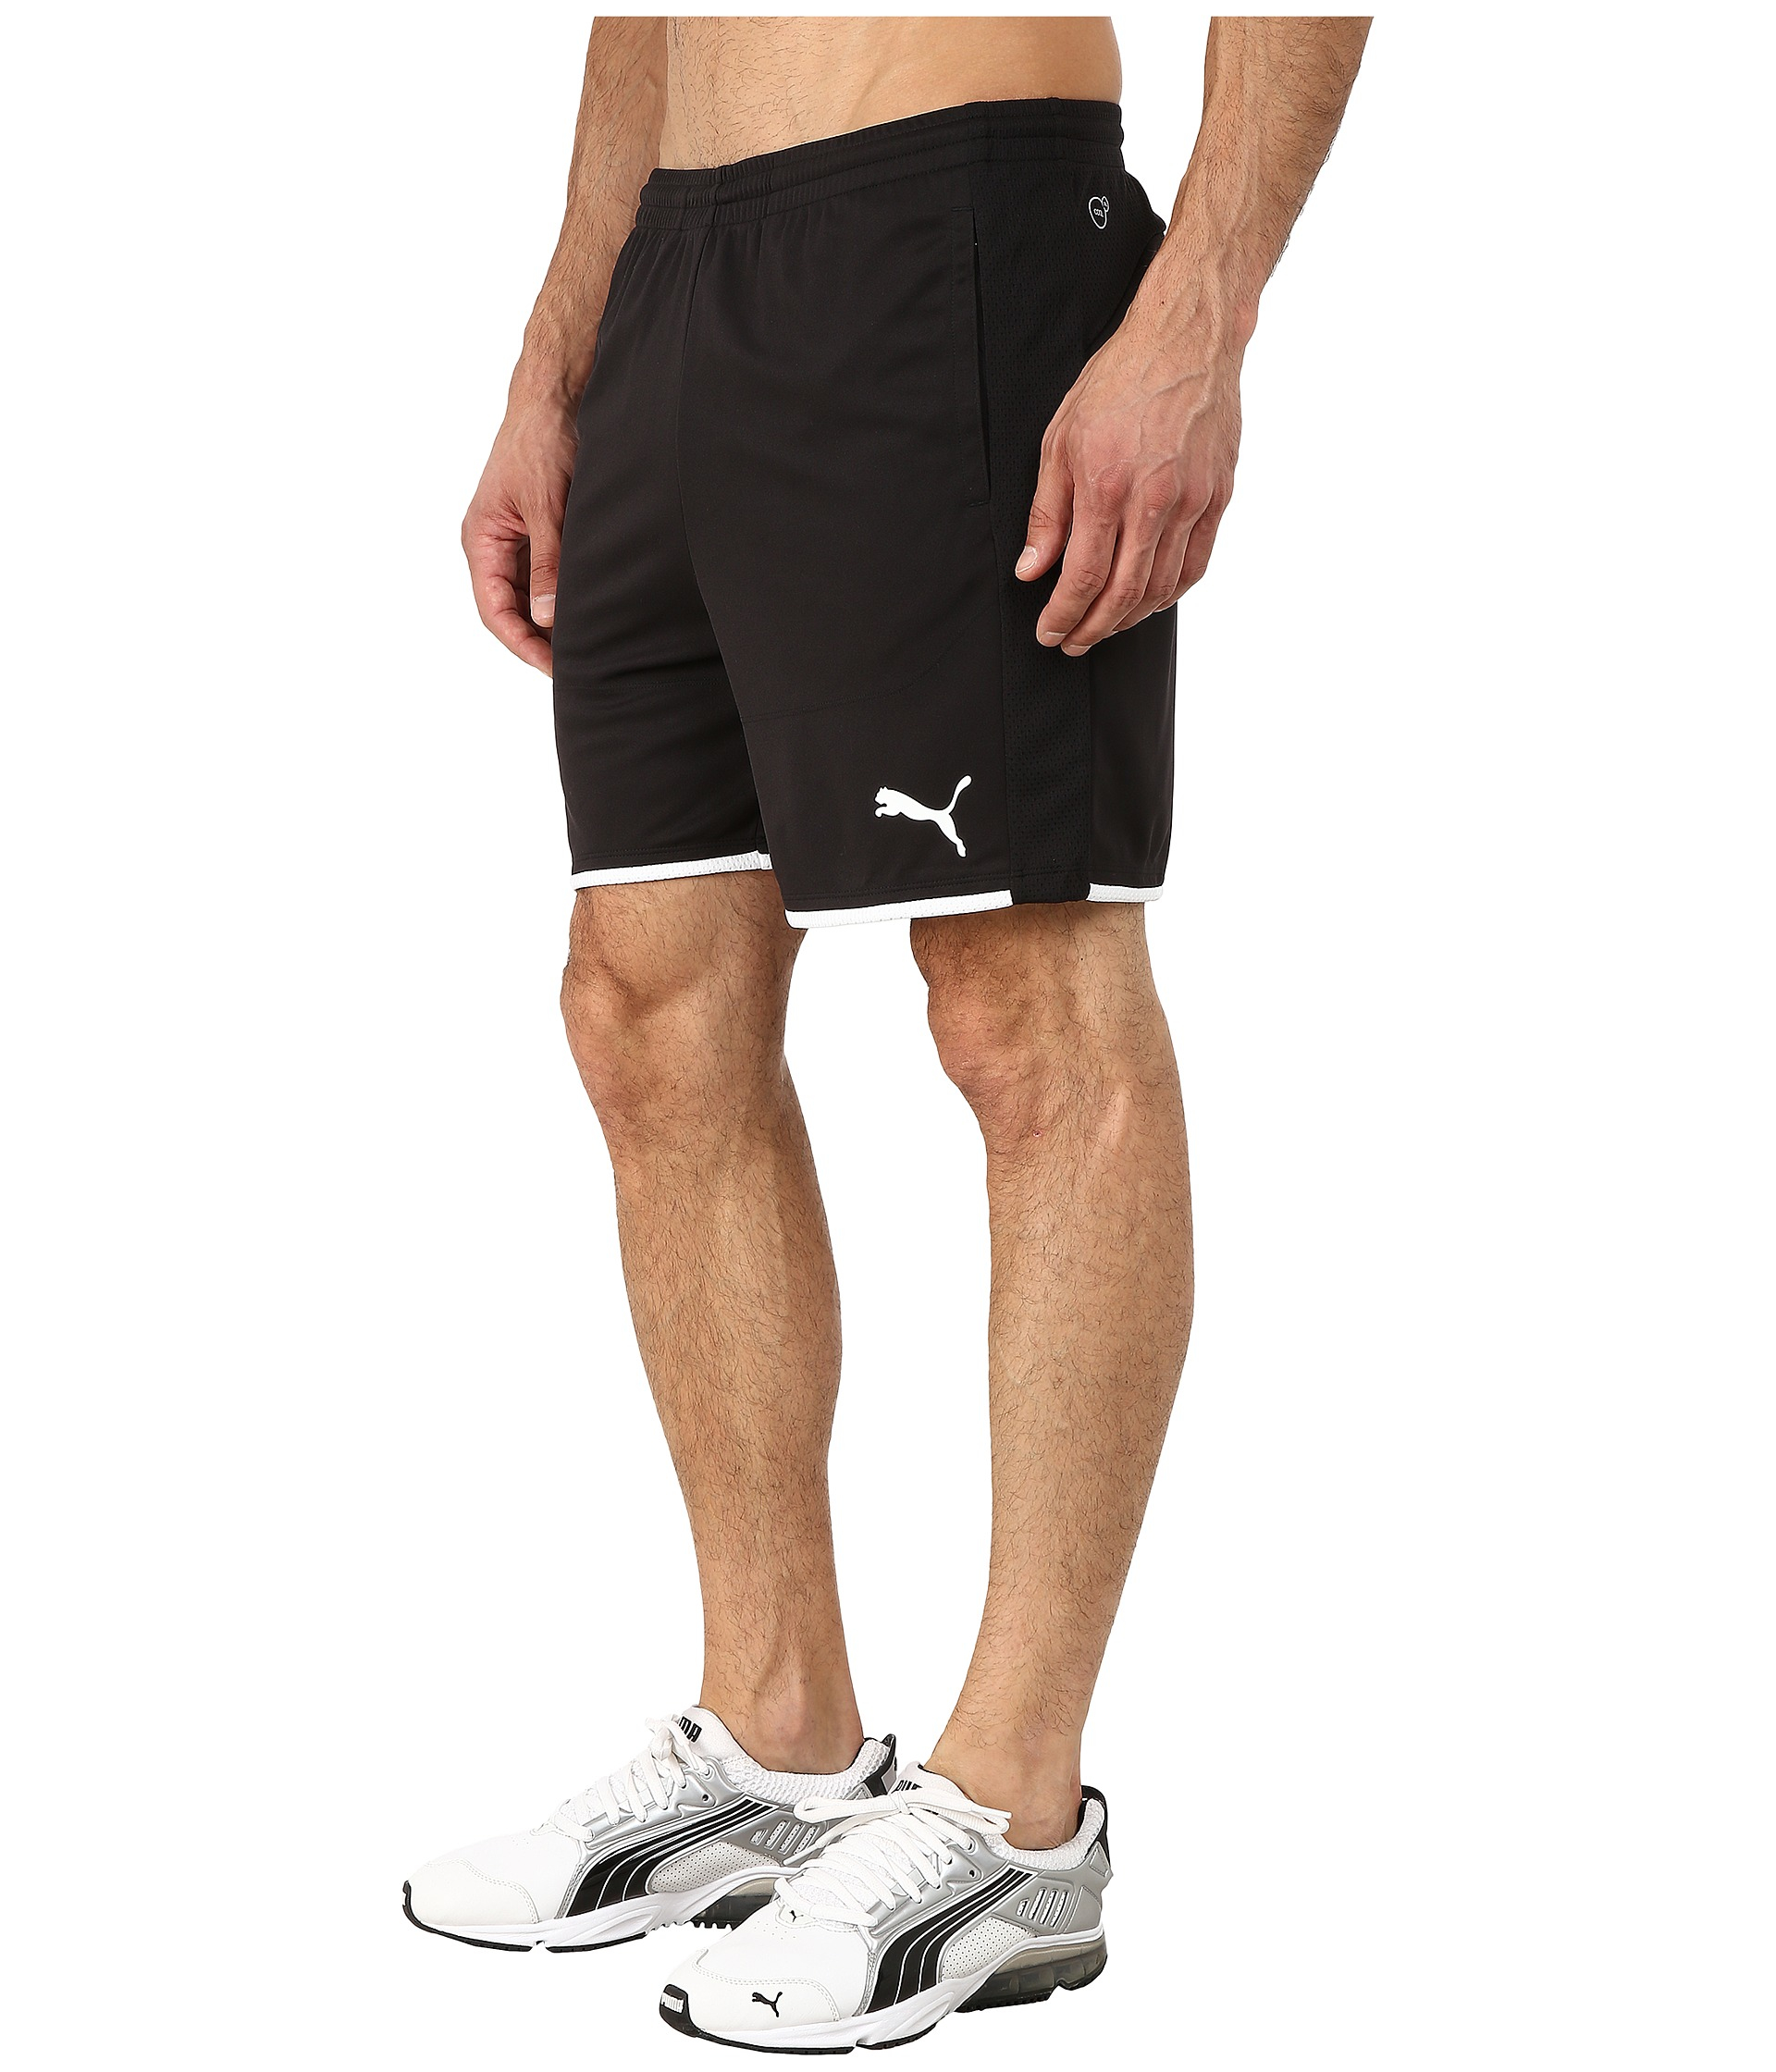 PUMA It Evotrg Shorts in Black/White 